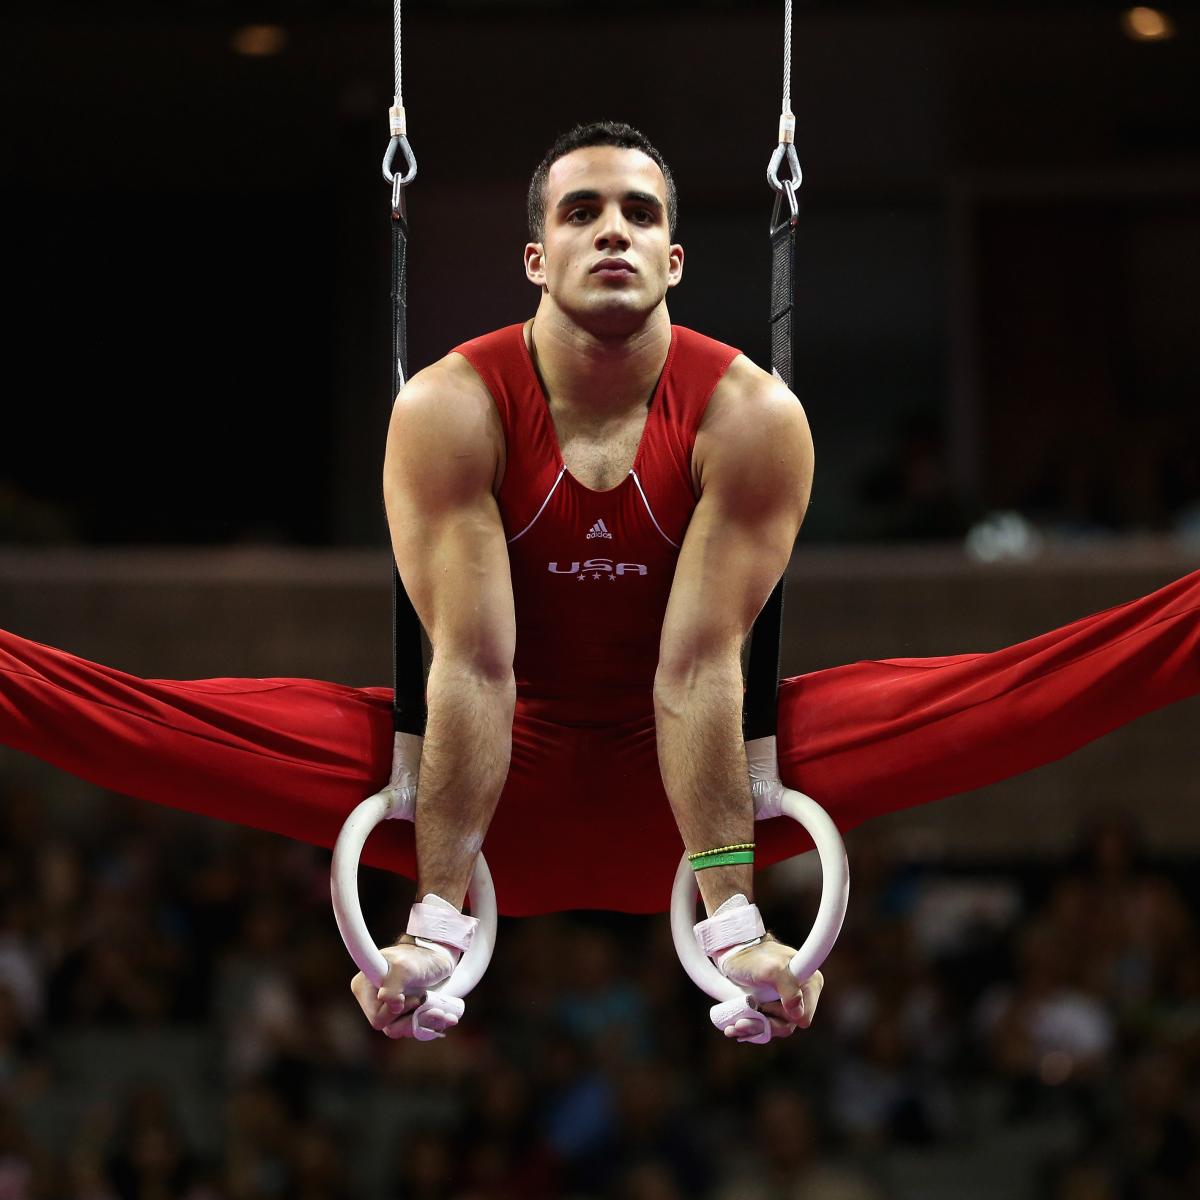 Olympics 2012 Schedule: US Men's Gymnastics Look to Continue Medal